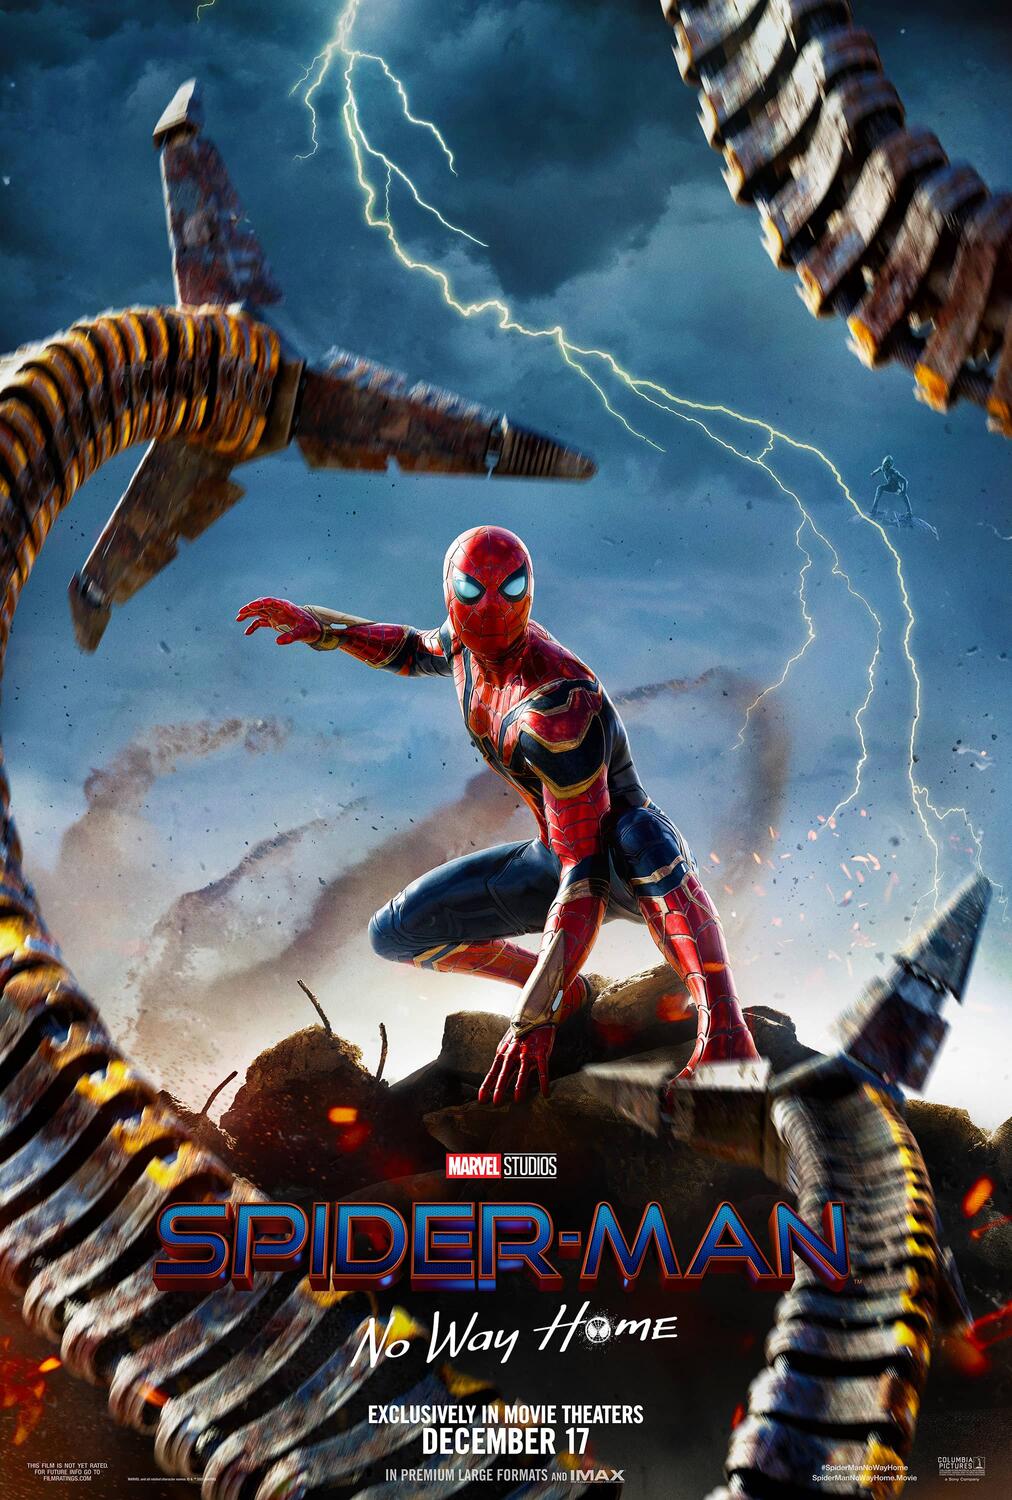 Stiahni si Filmy Kamera Spider-Man: Bez domova / Spider-Man: No Way Home (CZ Dab. Kino Zvuk)(2021)[HDCAM] = CSFD 89%